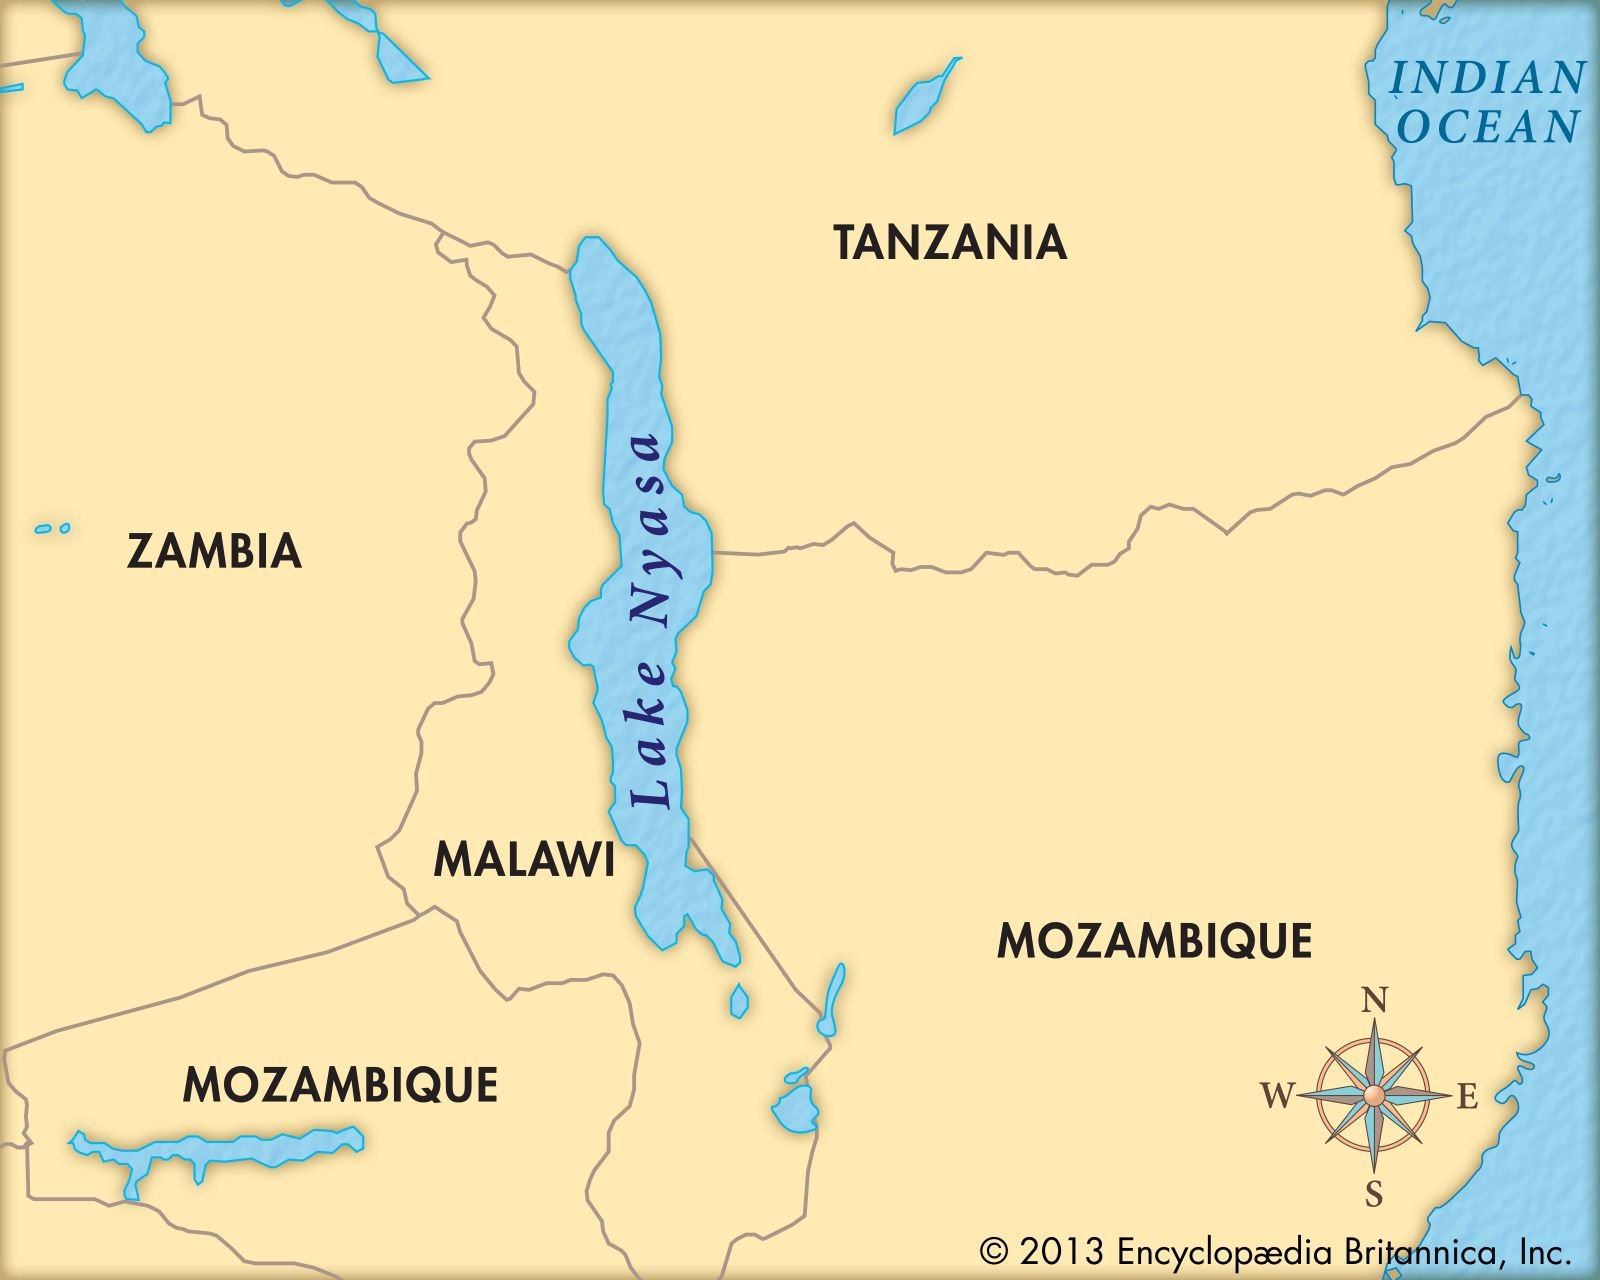 Озеро ньяса расположено. Оз Ньяса на карте. Озеро Ньяса на контурной карте Африки.